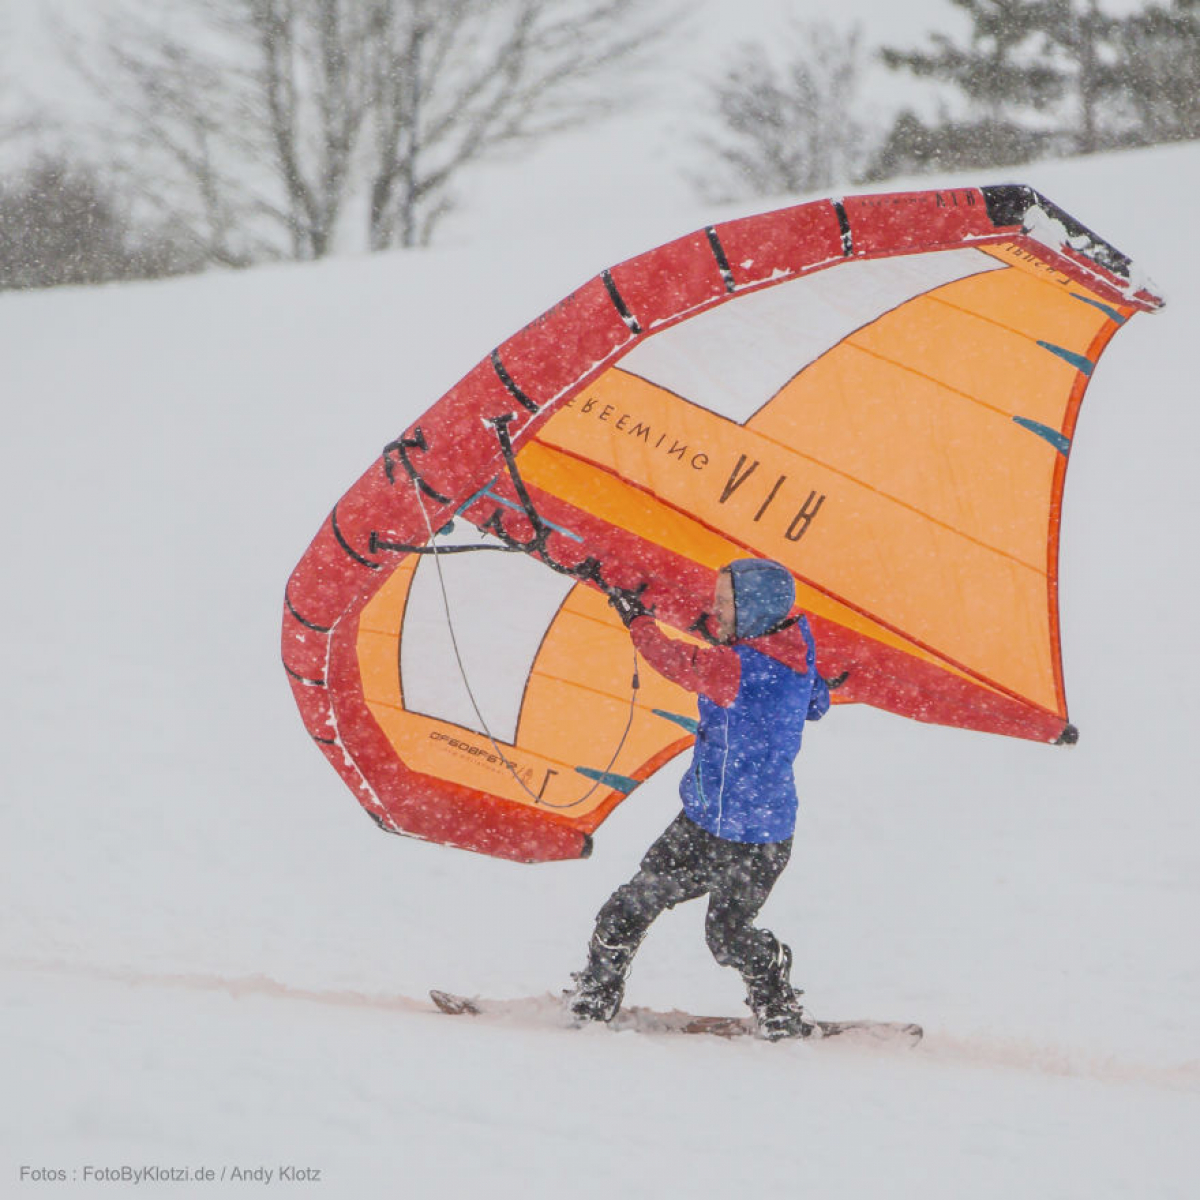 Wing + Snowboard - Mittagspausenspaß